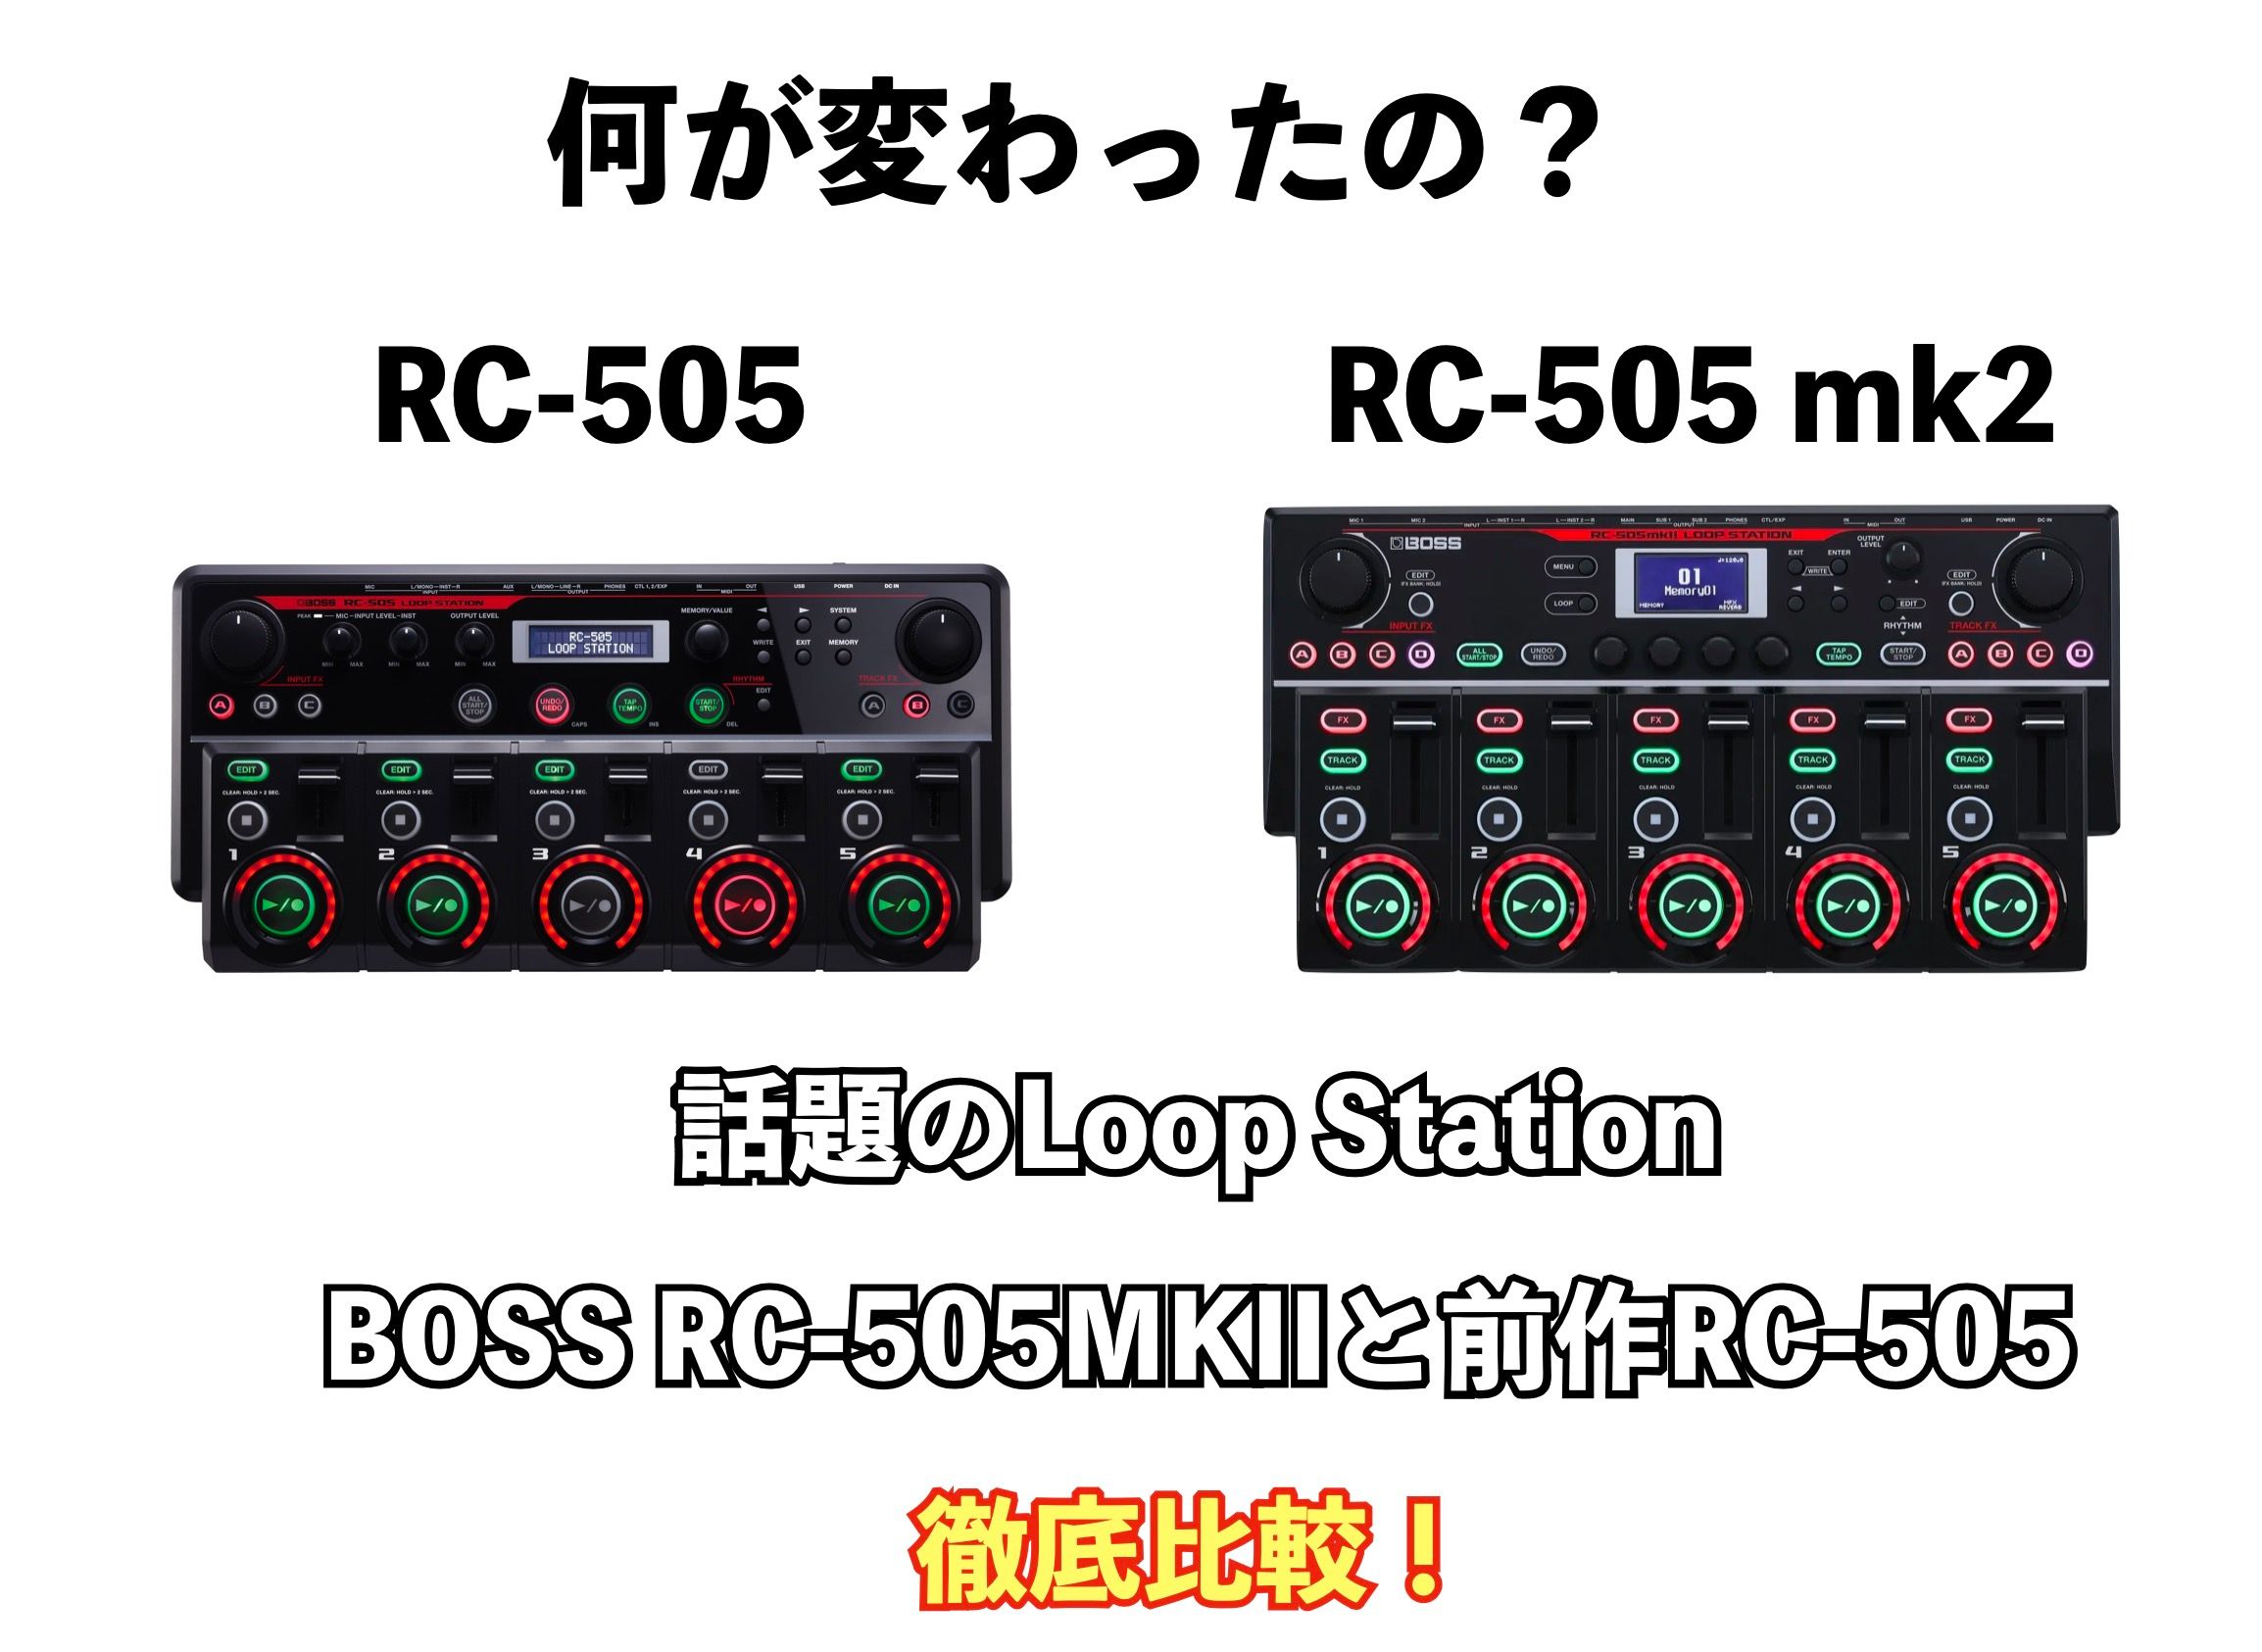 BOSS RC-505